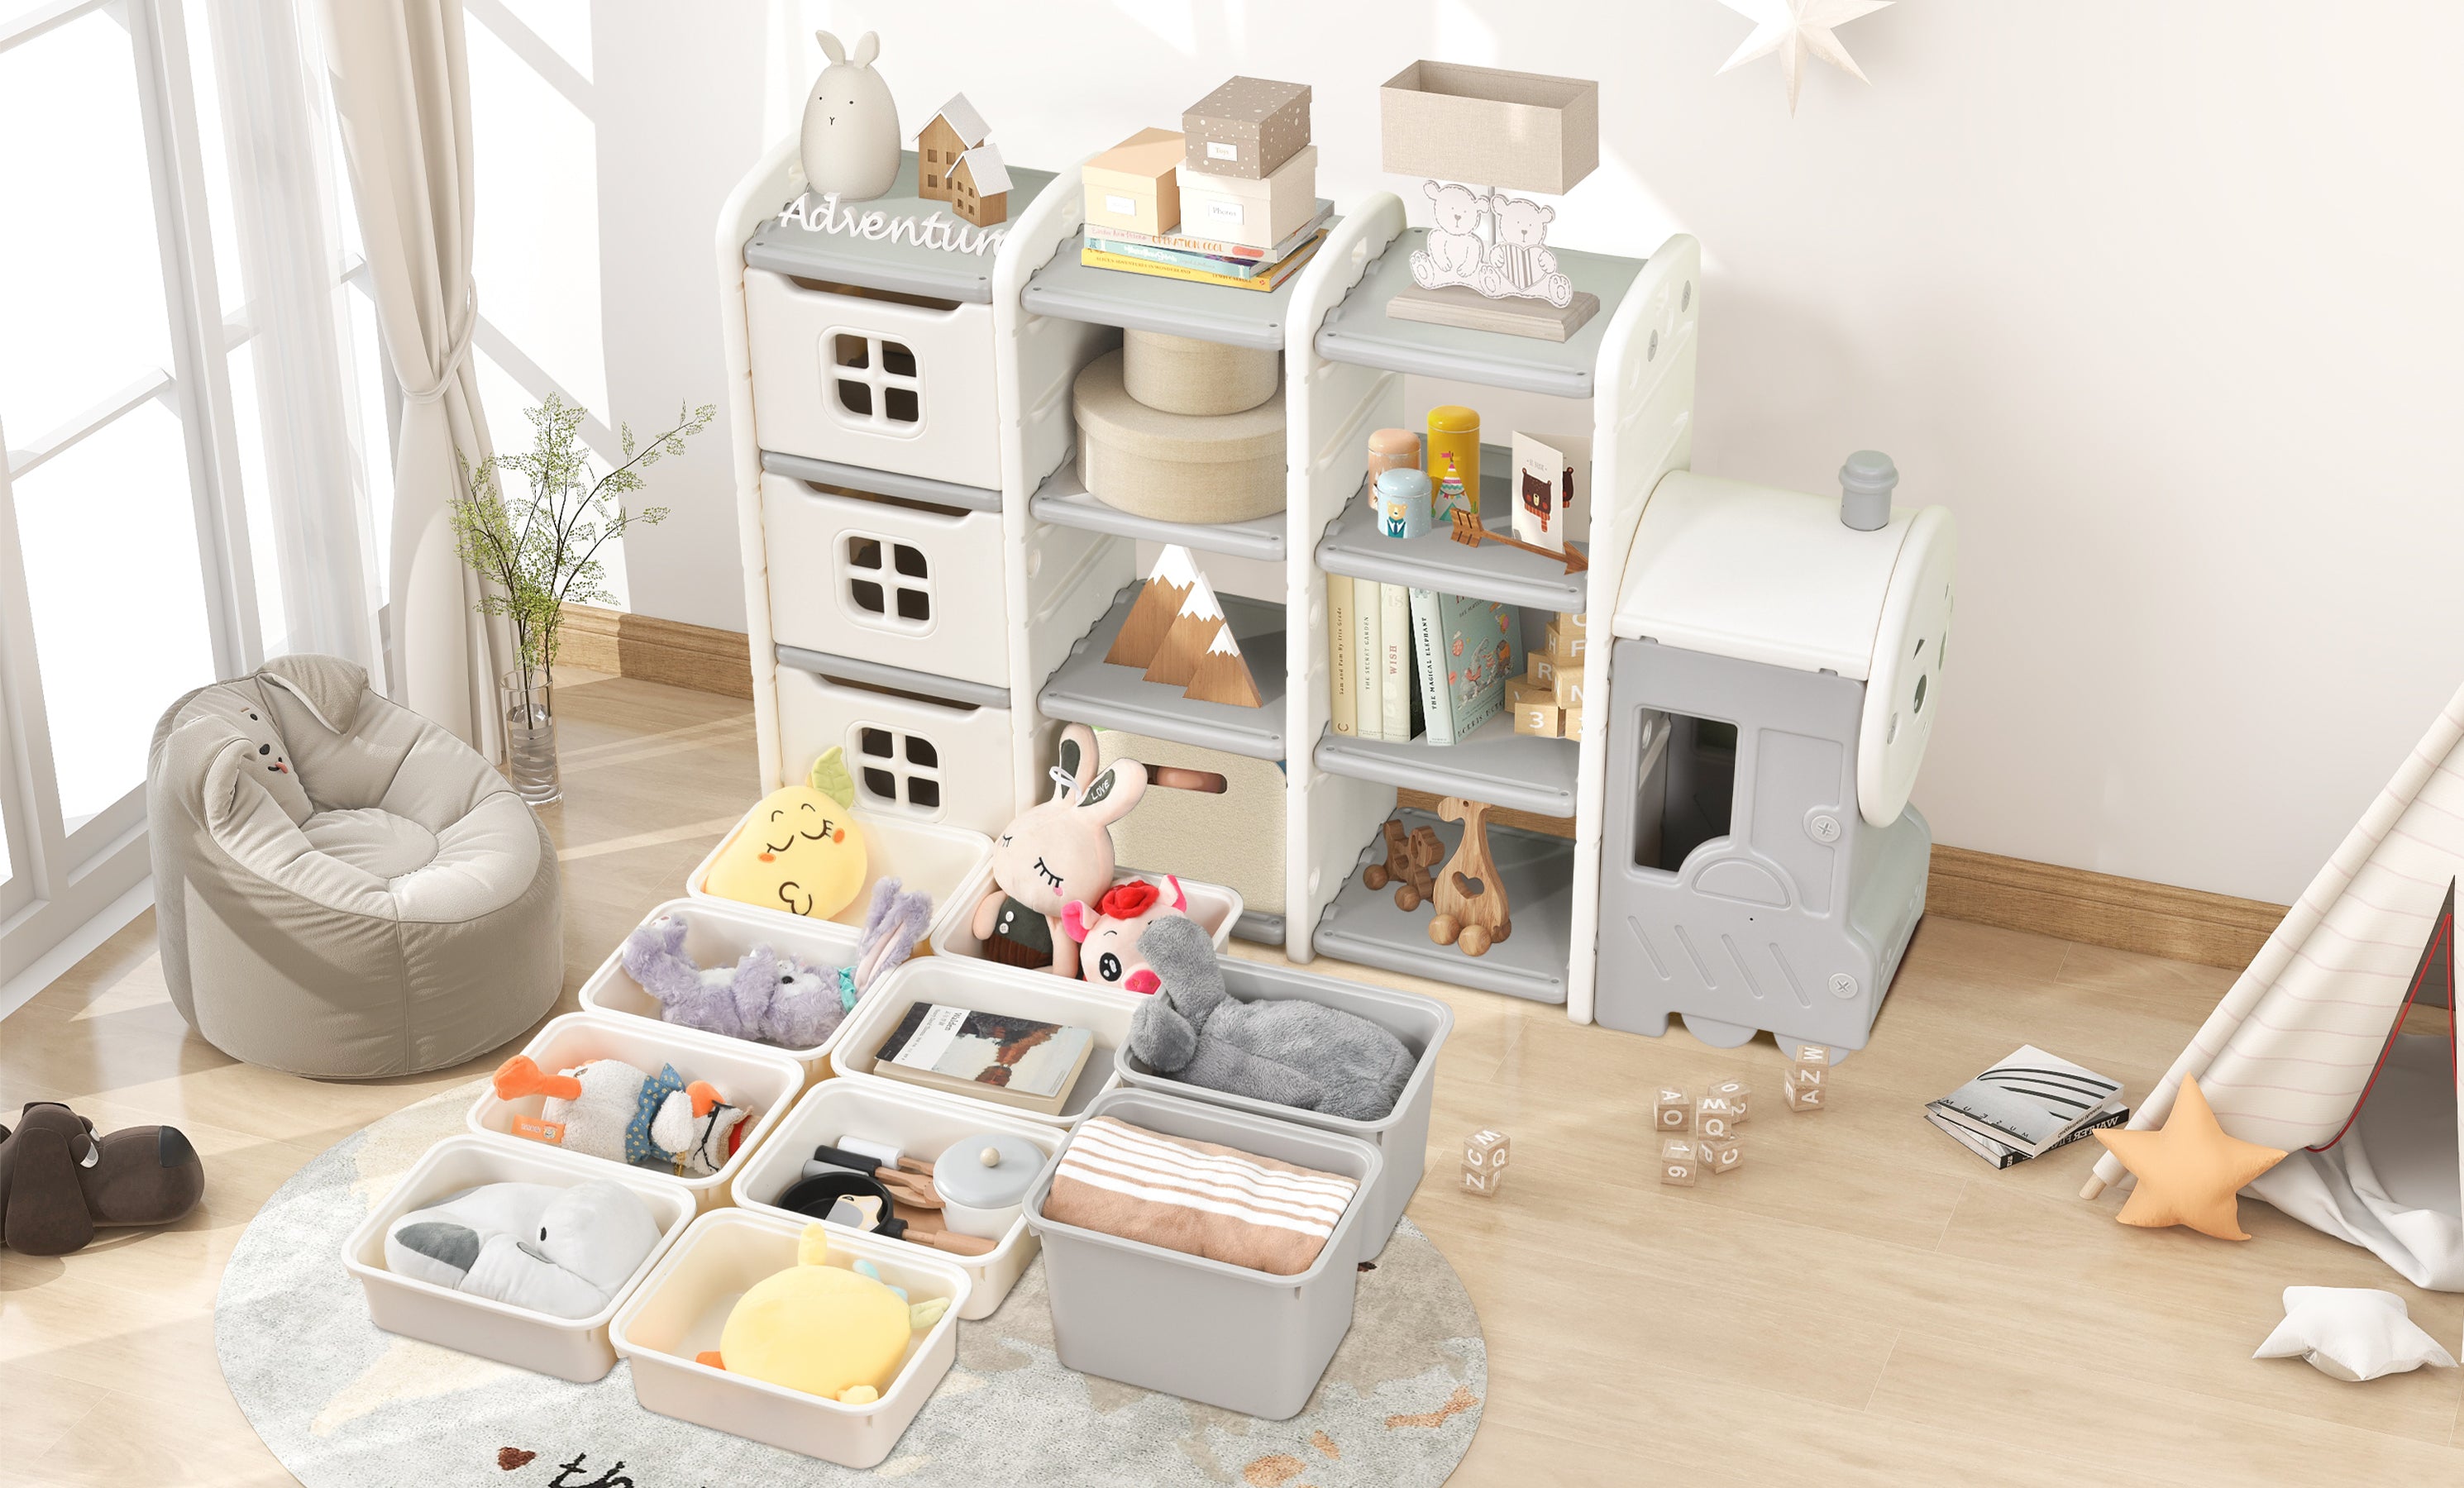 Kids Toy Storage Organizer Bin with 13 Bins and Cabinets